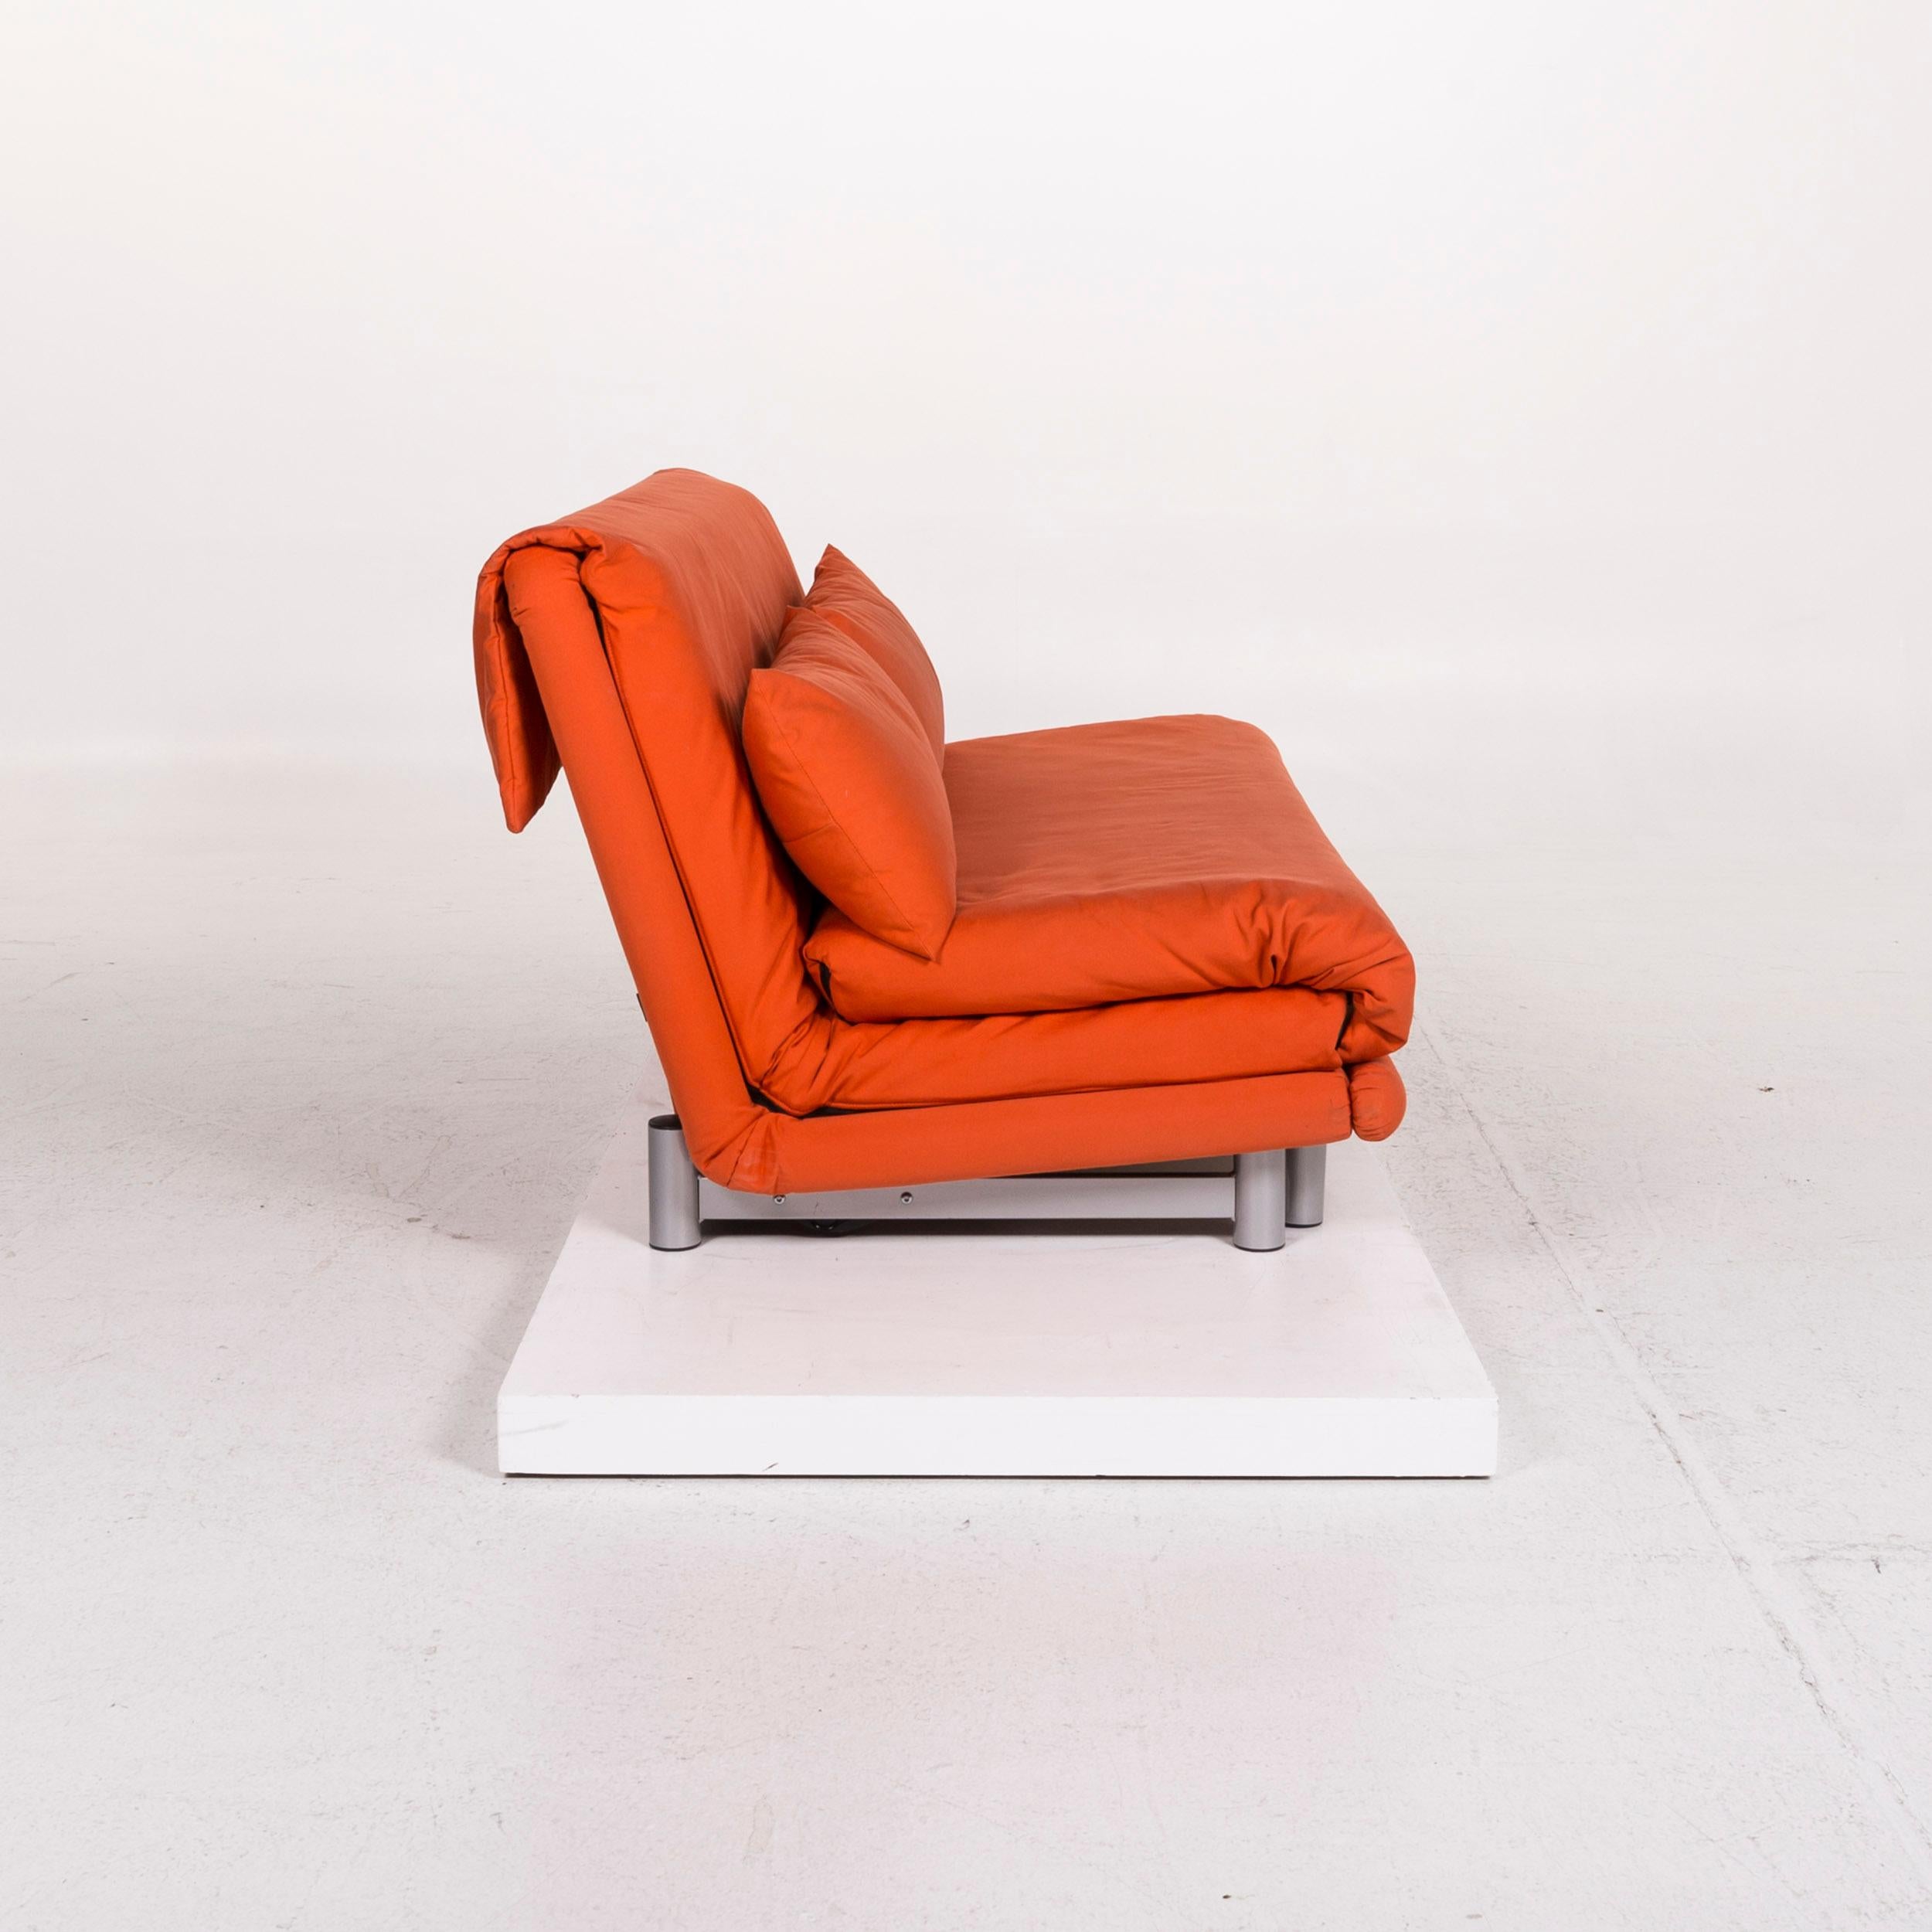 Contemporary Ligne Roset Multy Fabric Sofa Bed Orange Sofa Two-Seat Sleep Function